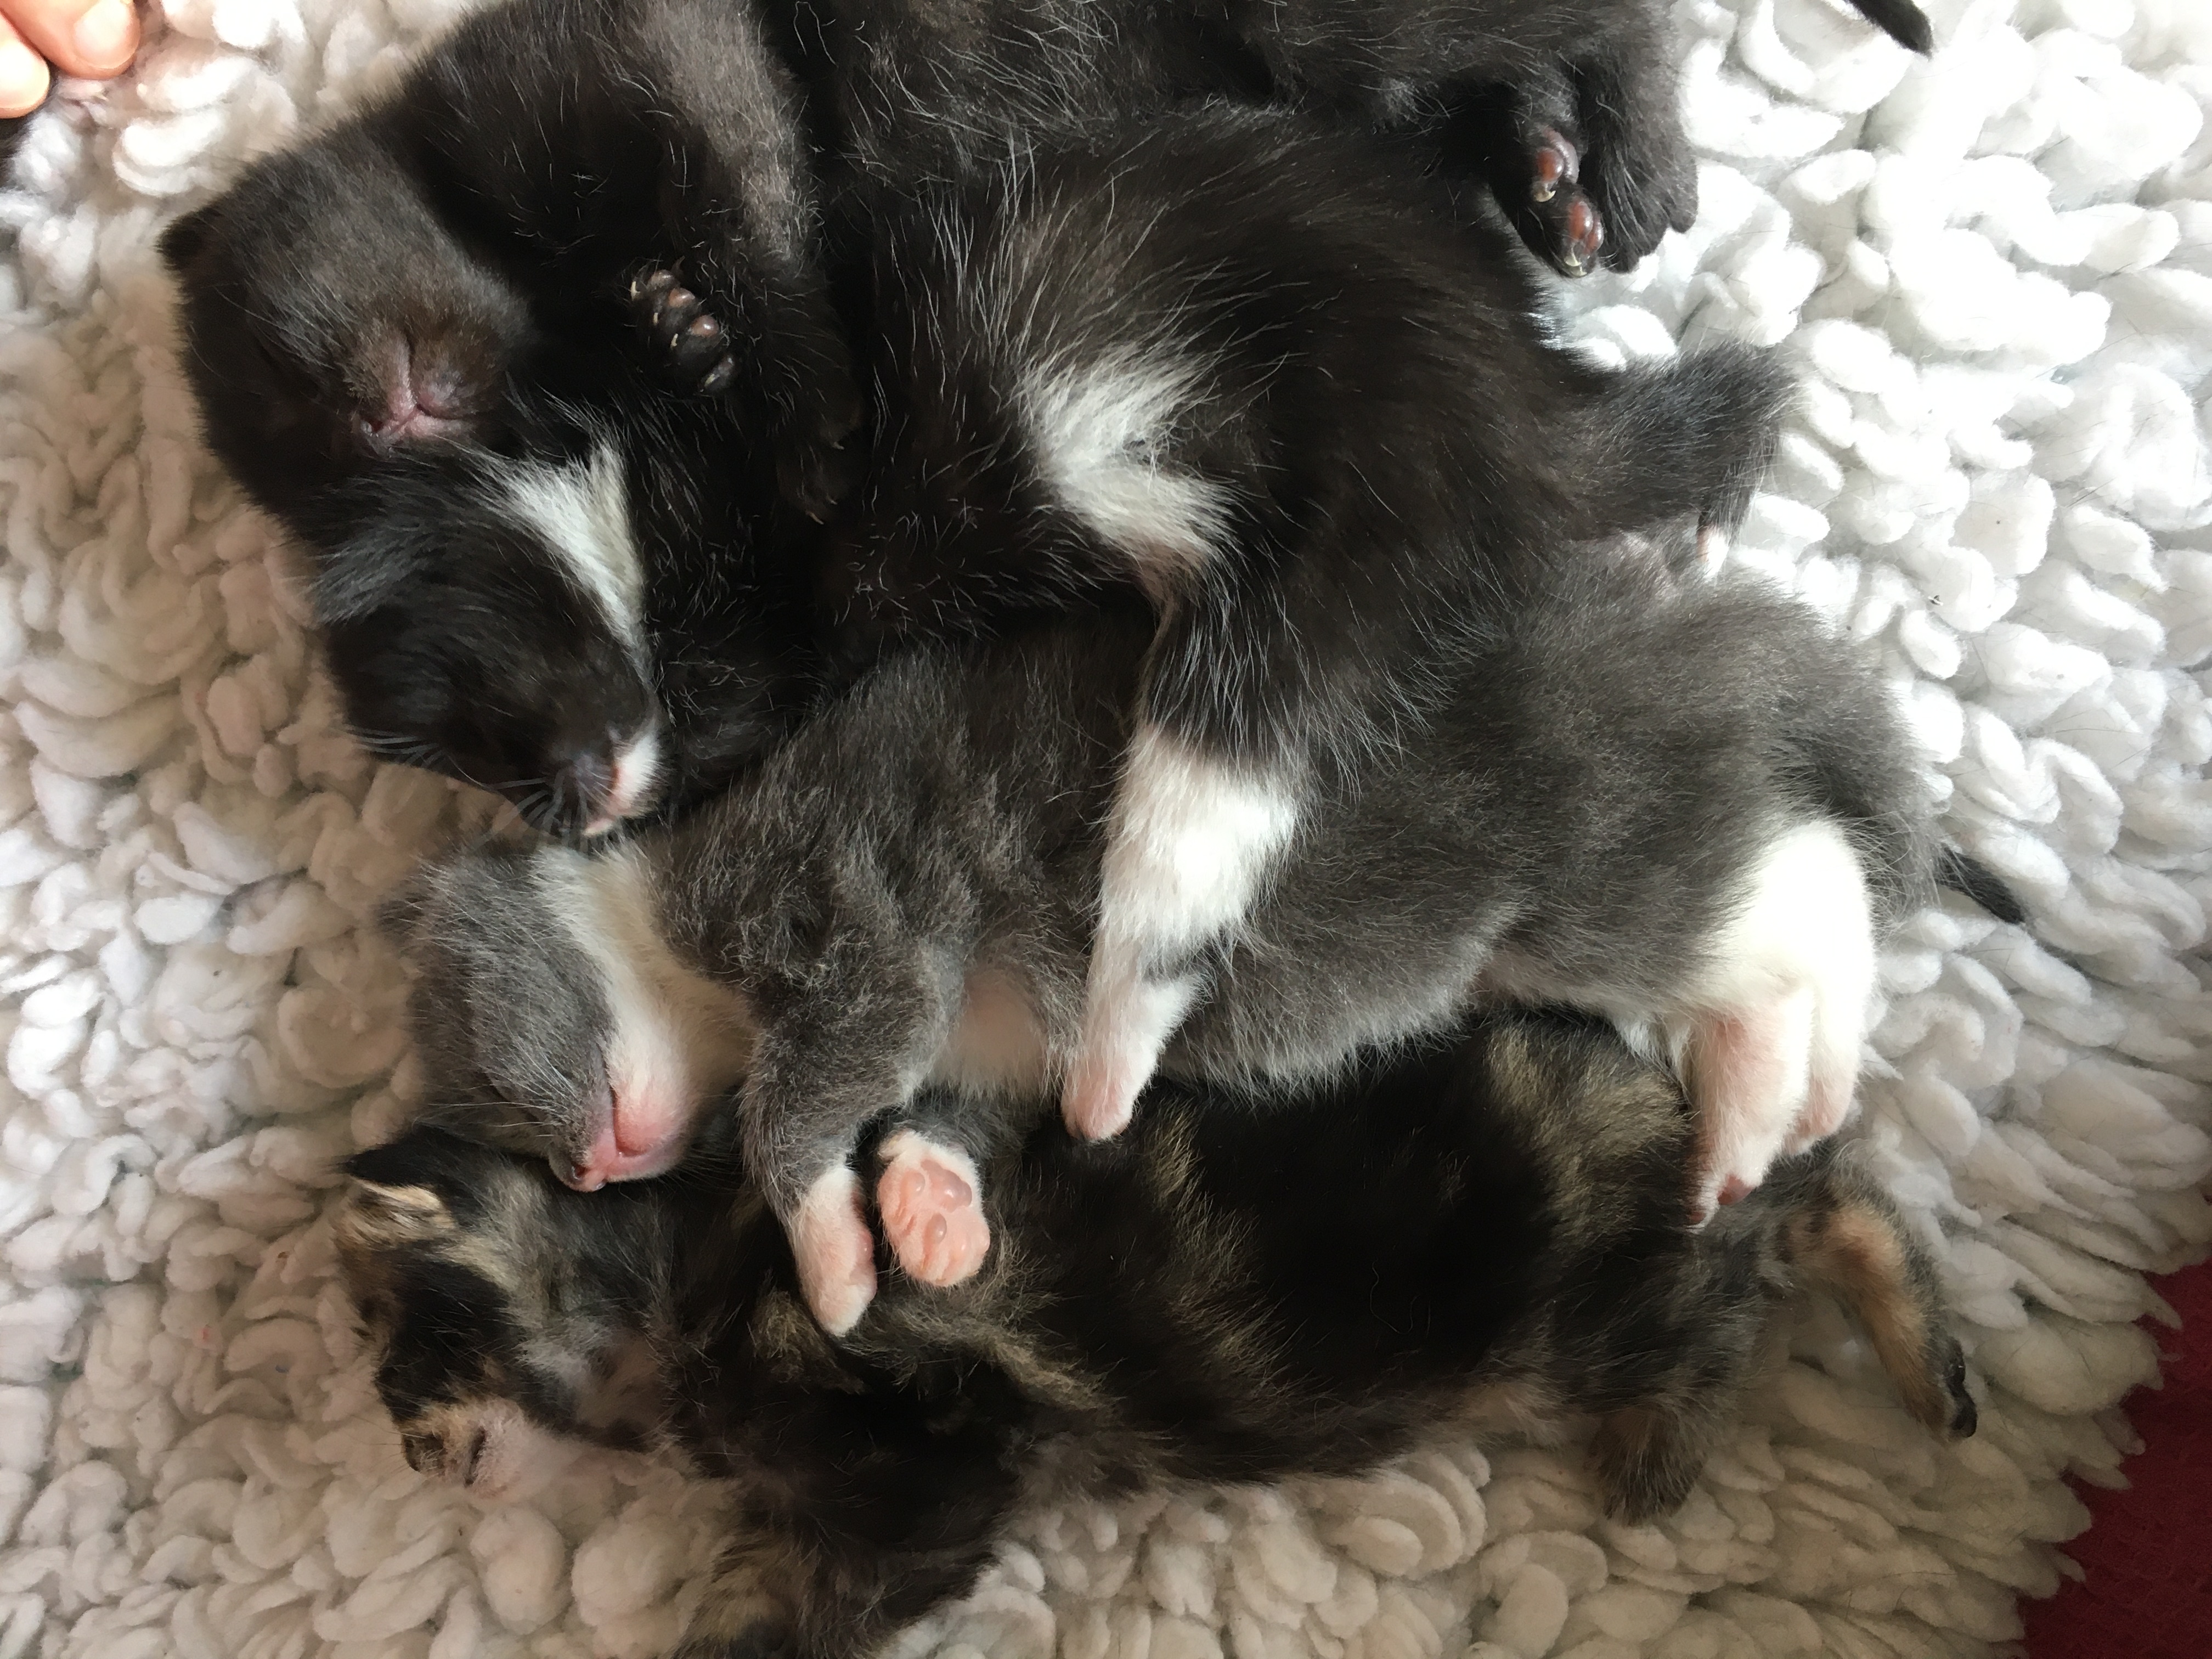 Lola's kittens